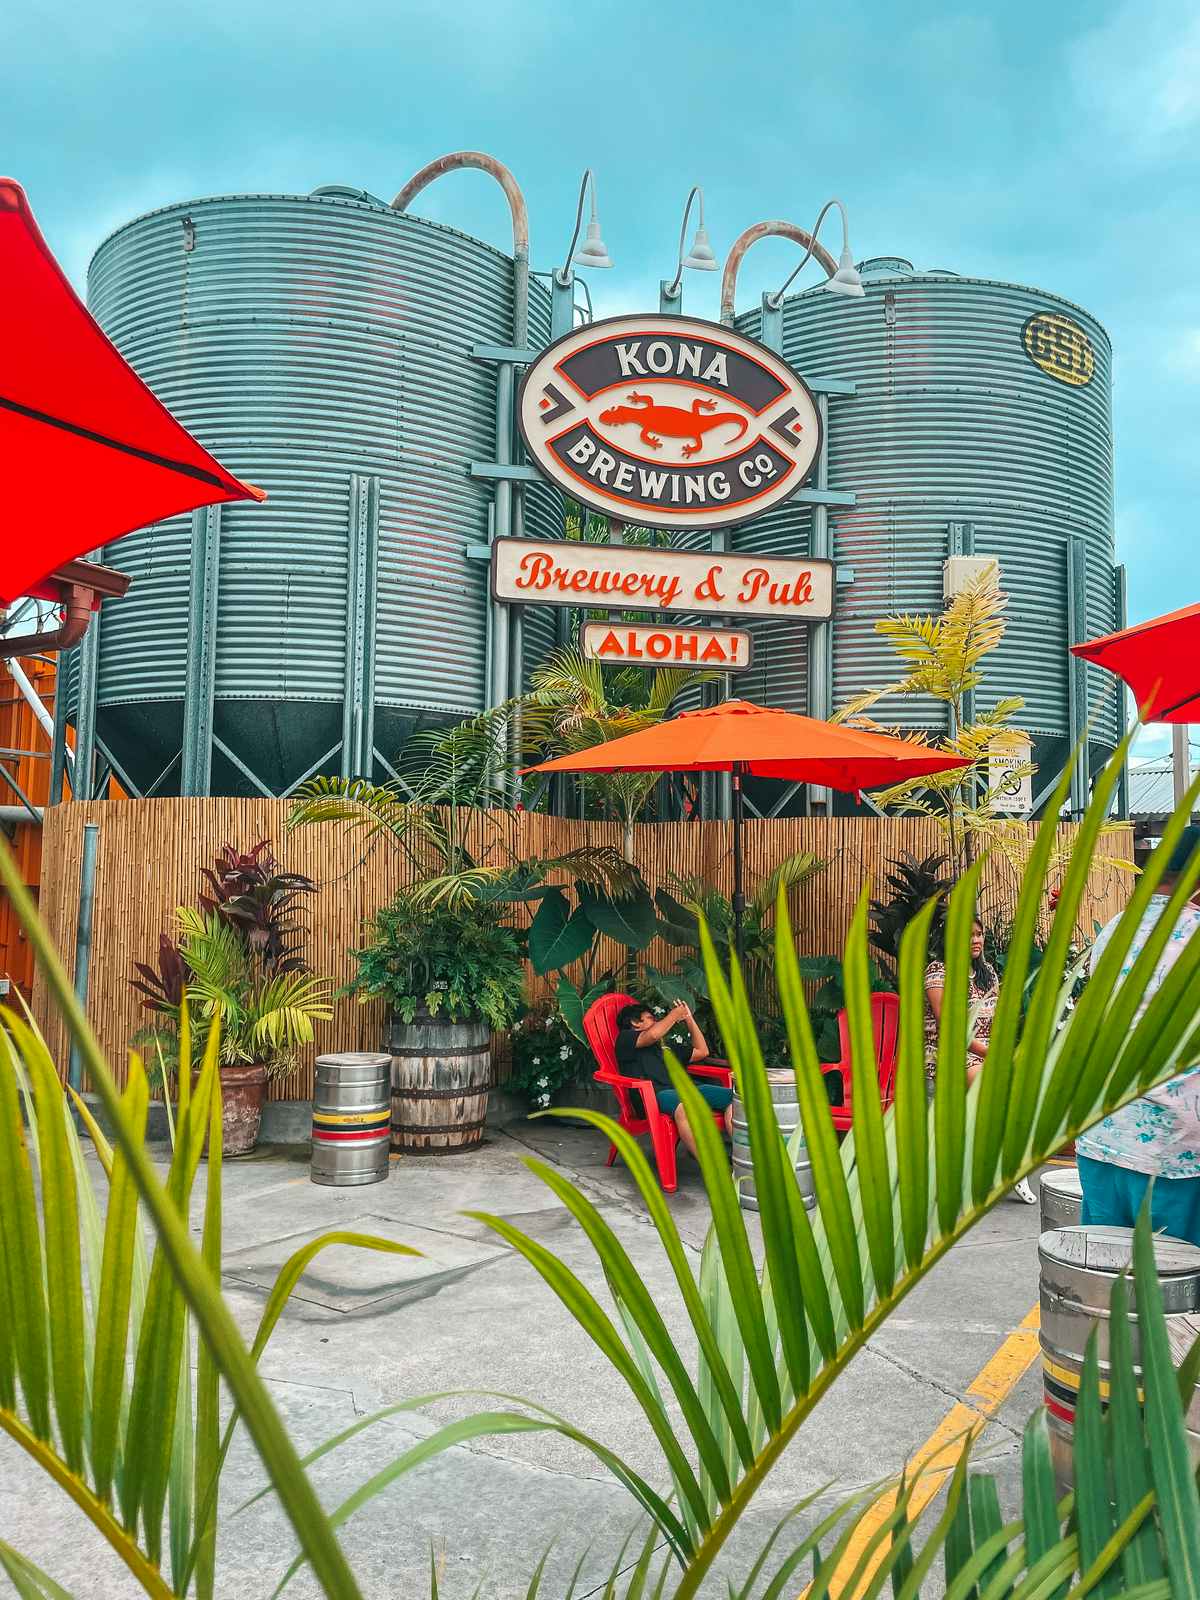 Kona Brewery and Pub